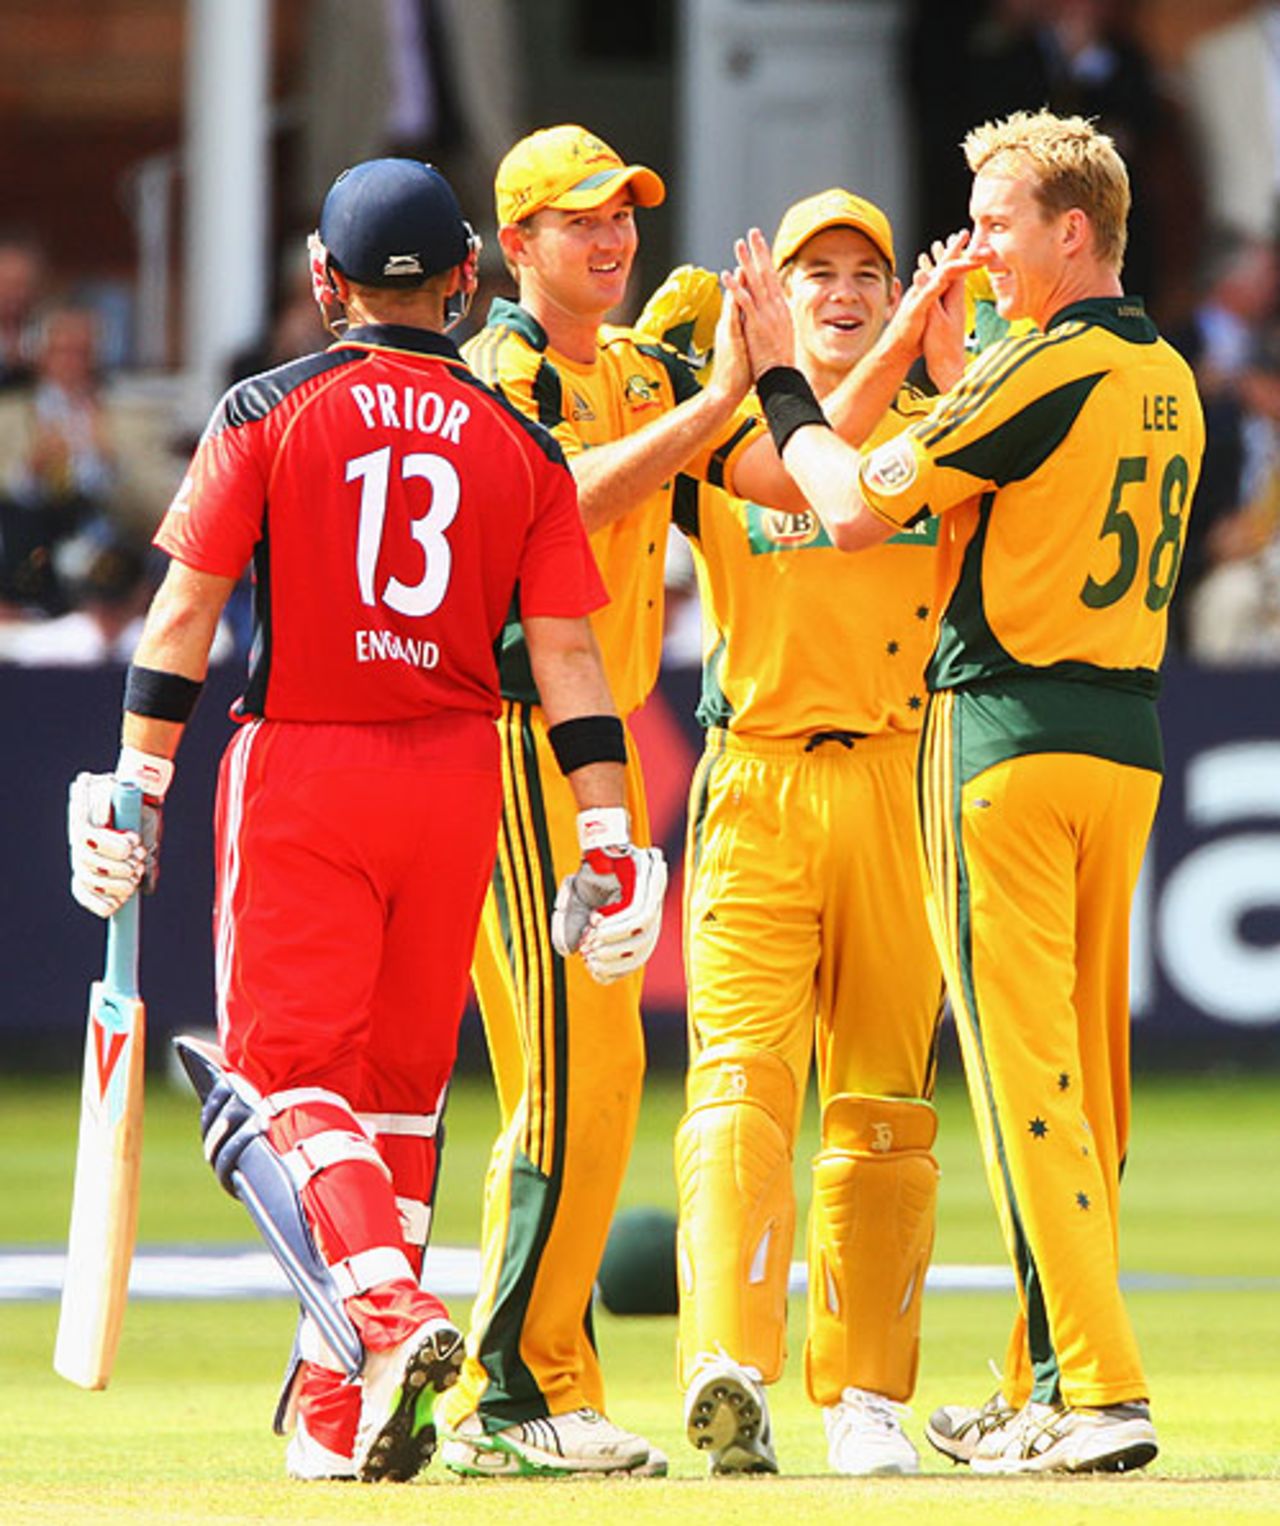 Brett Lee produced a superb yorker to dismiss Matt Prior, England v Australia, 4th ODI, Lord's, September 12, 2009